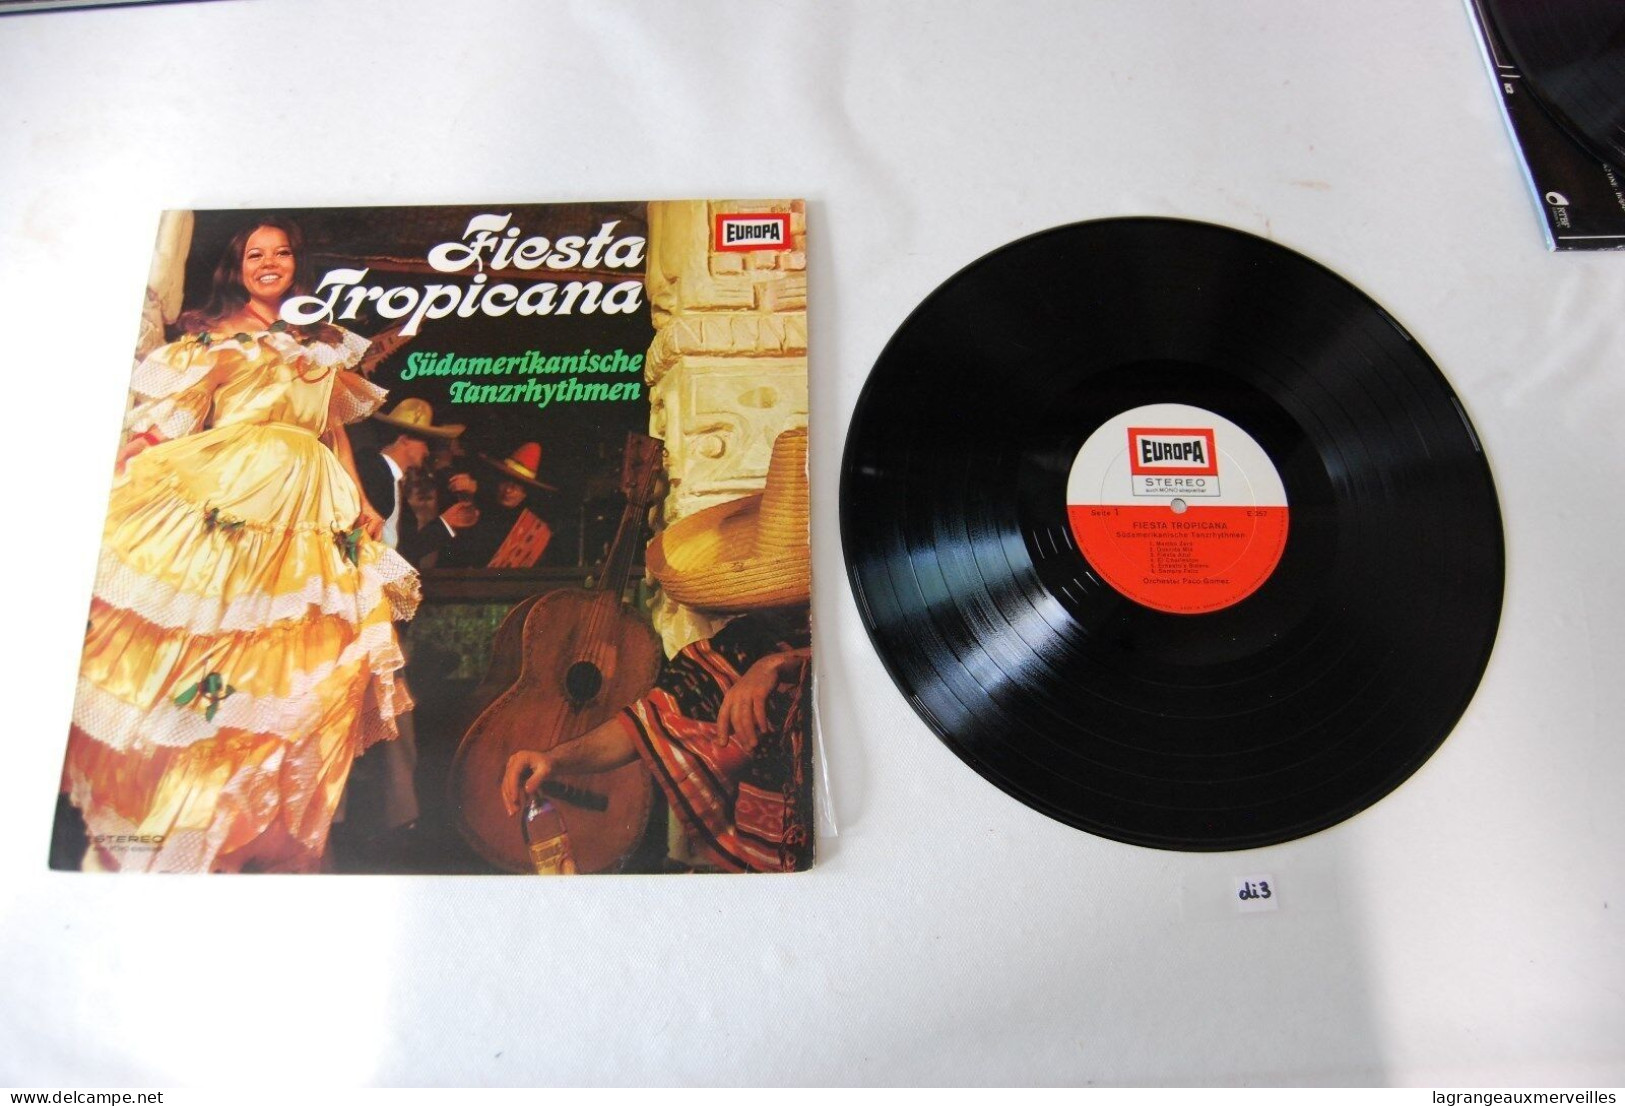 Di3- Vinyl 33 T - Fiesta Tropicana - Europa - World Music